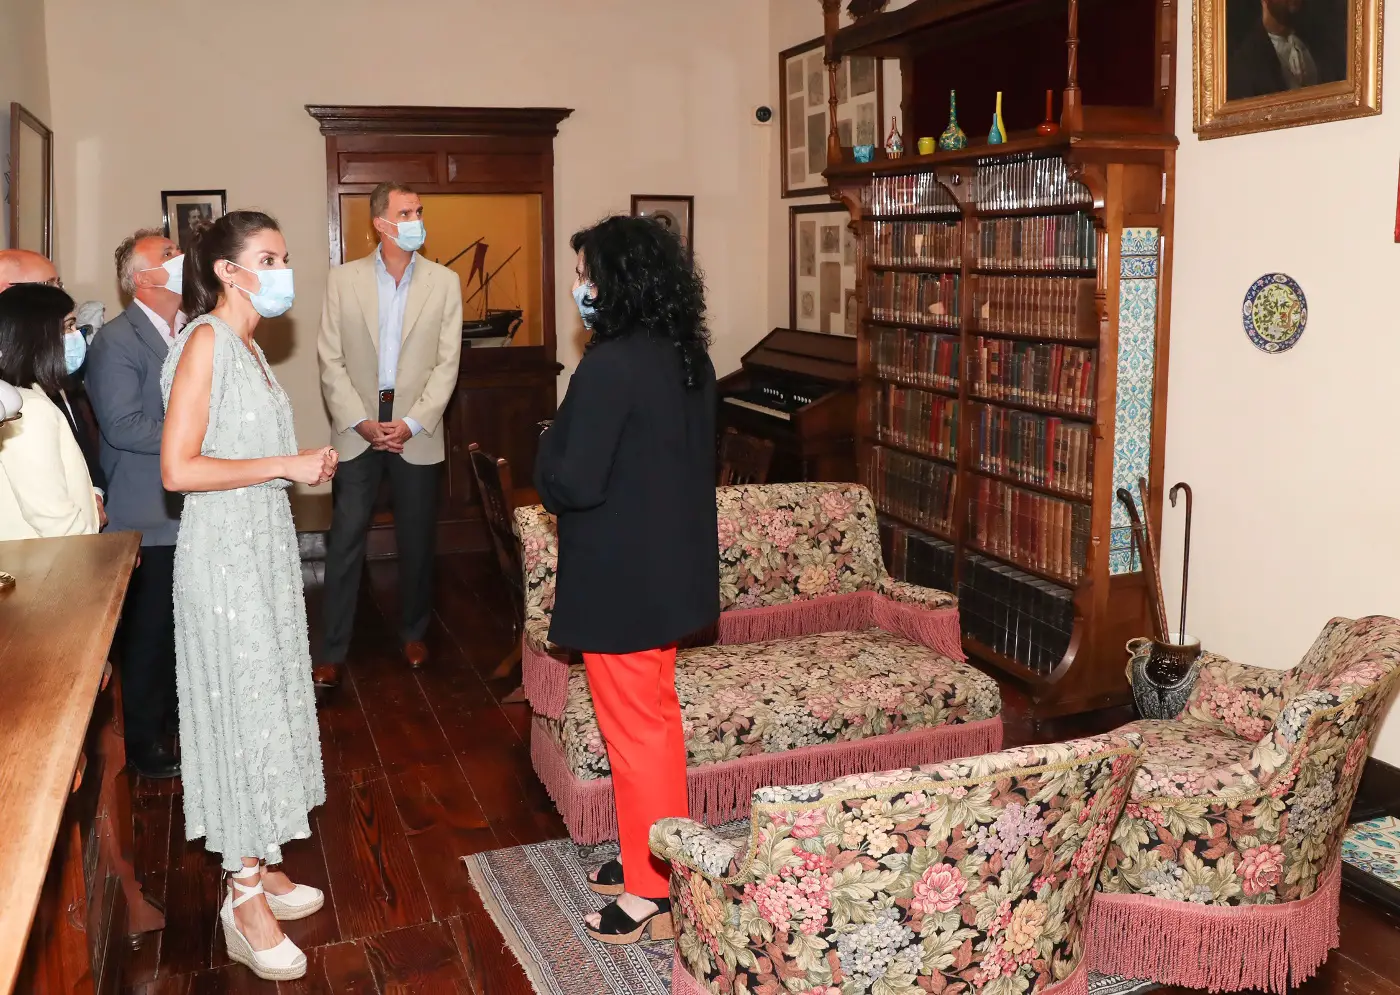 King Felipe and Queen Letizia in the facilities of the Benito Pérez Galdós House-Museum